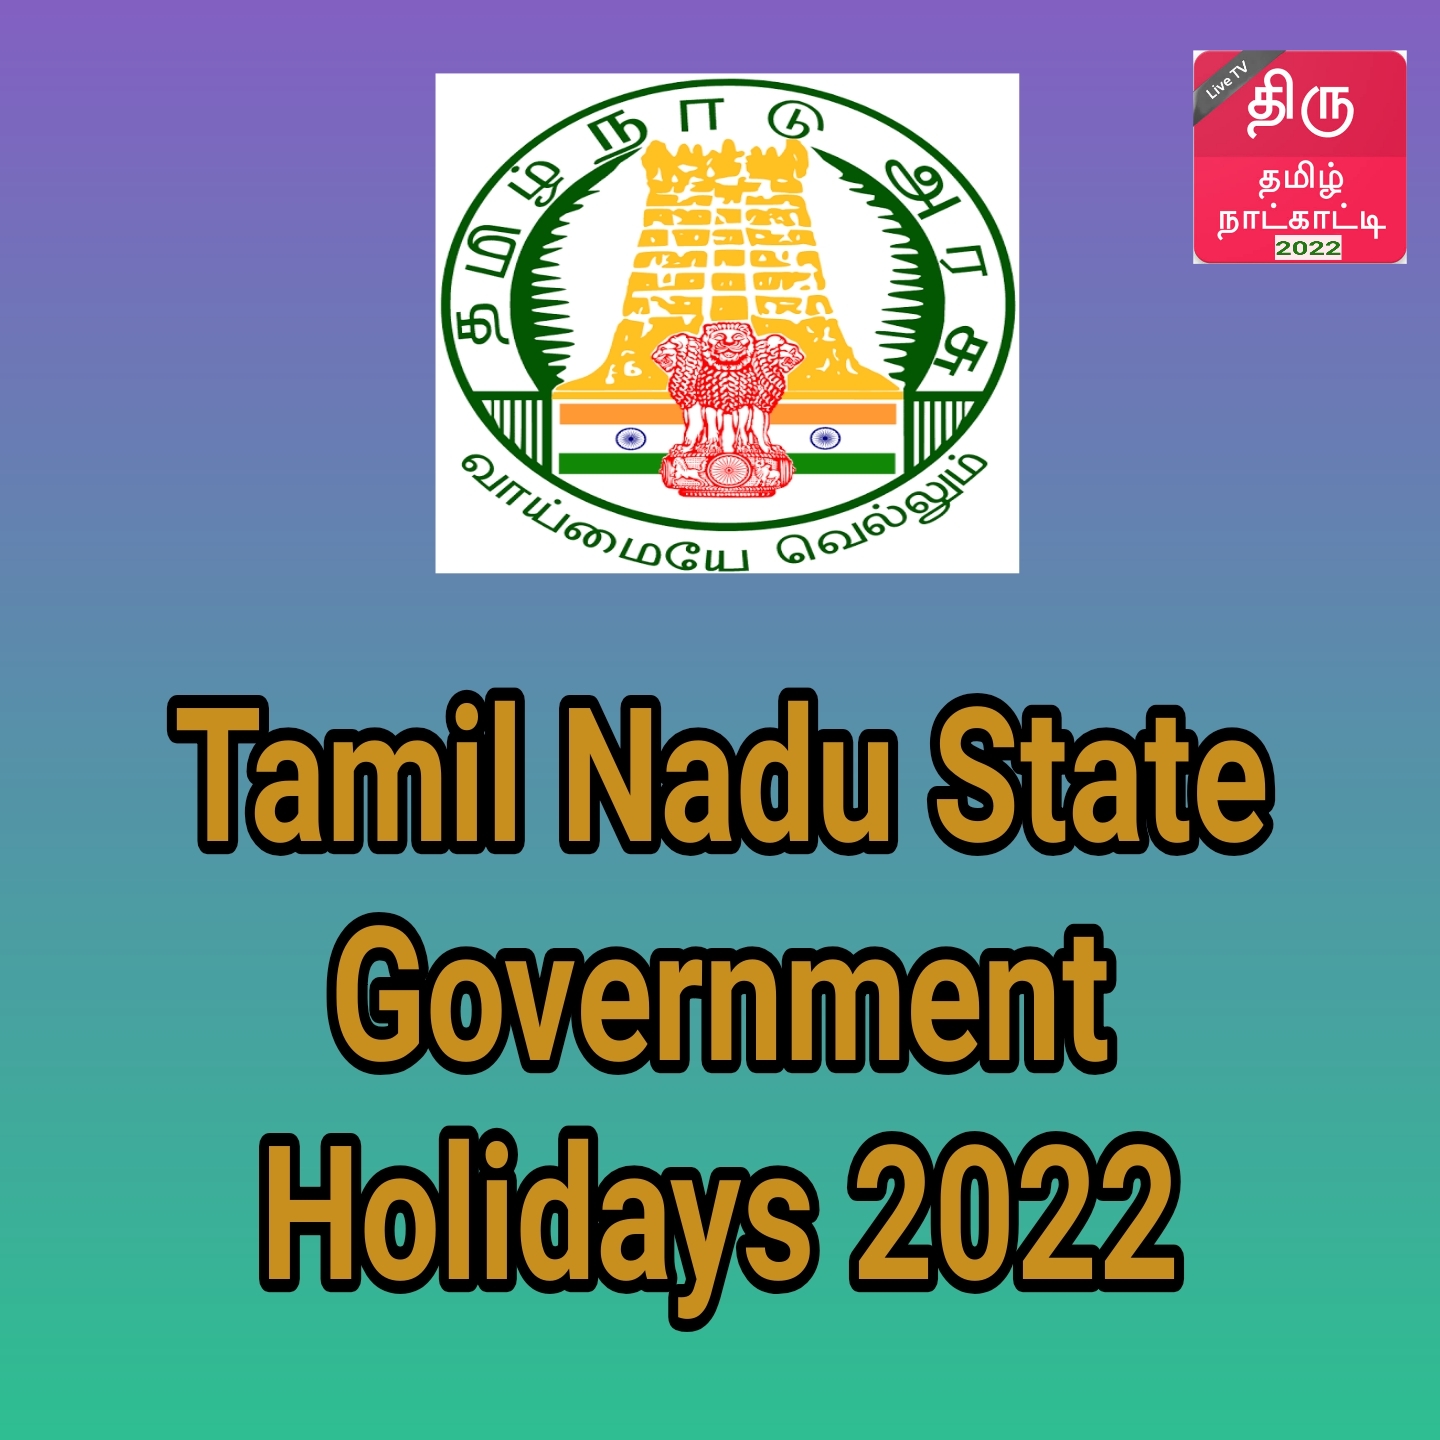 Tamilnadu Government Holiday 2022